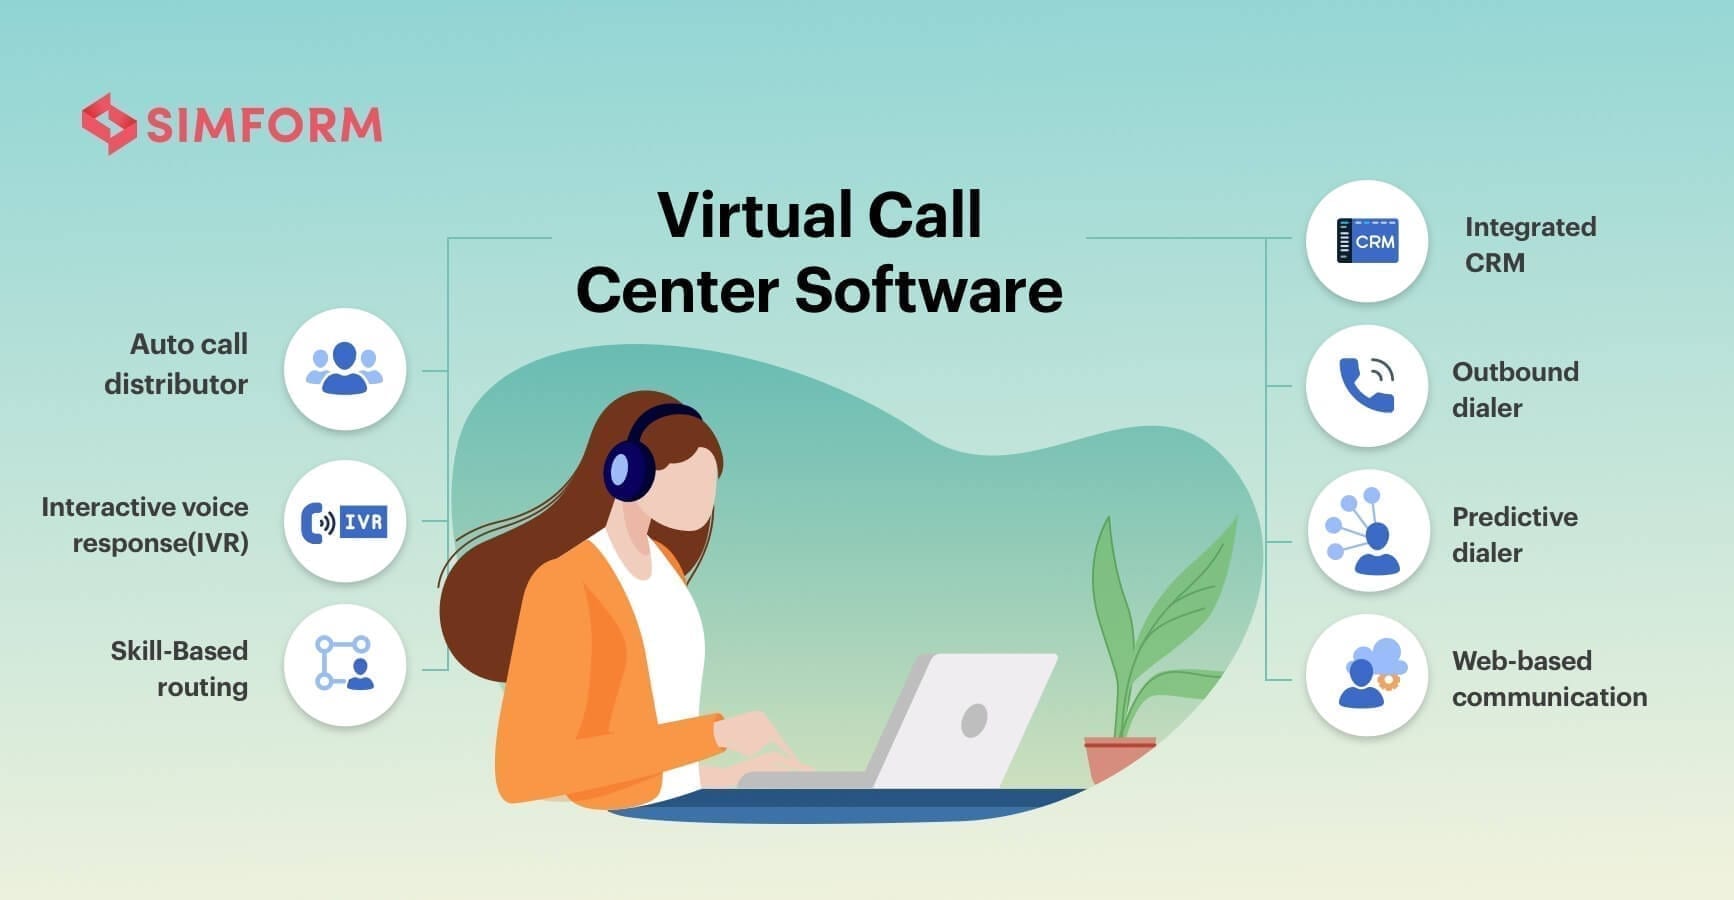 ntouch call center software